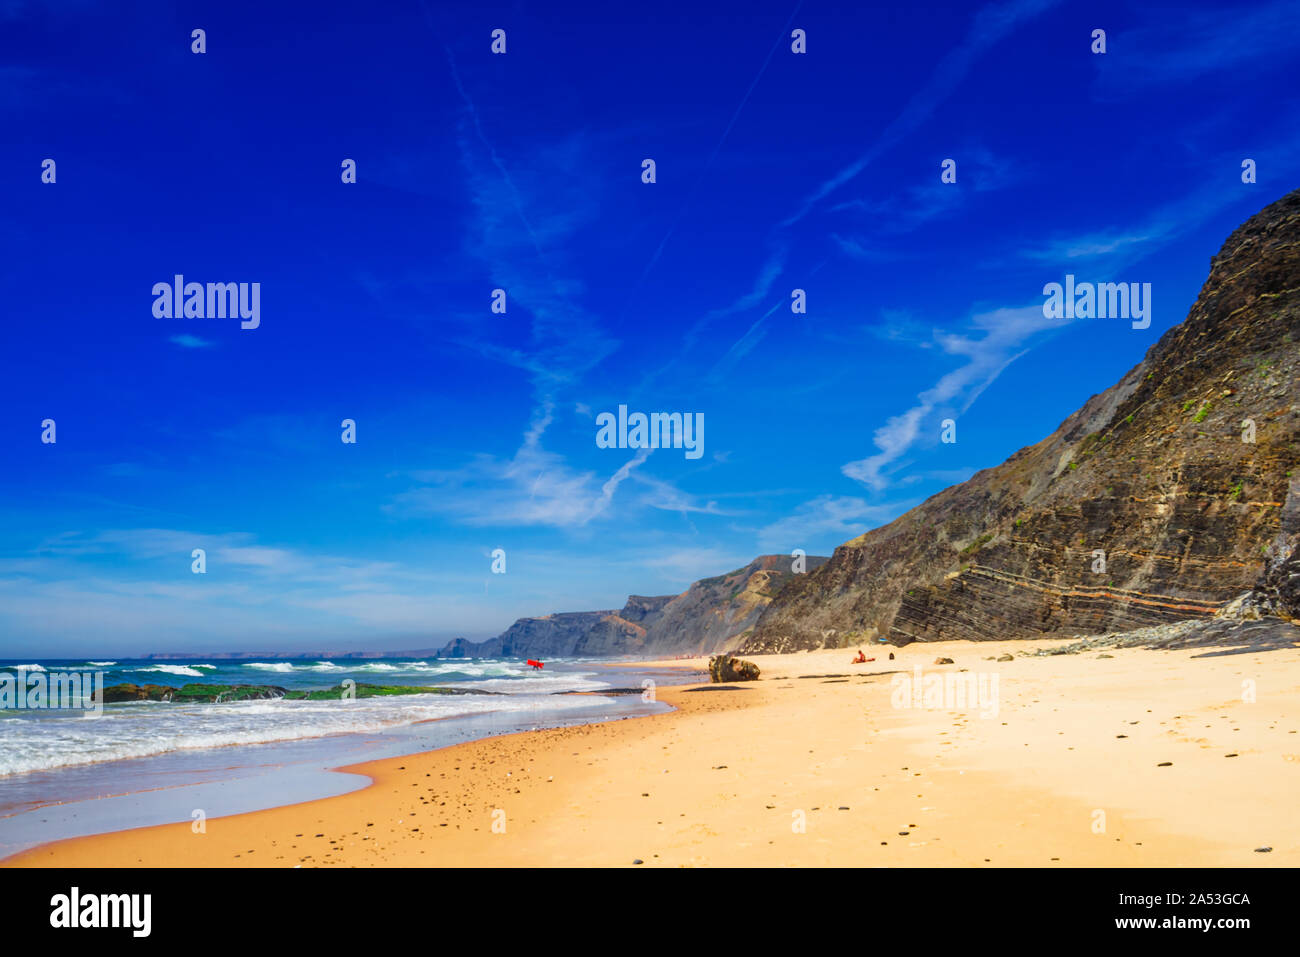 View on beautiful beach Praia do Castelejo at the Algarve coast in Portugal Stock Photo